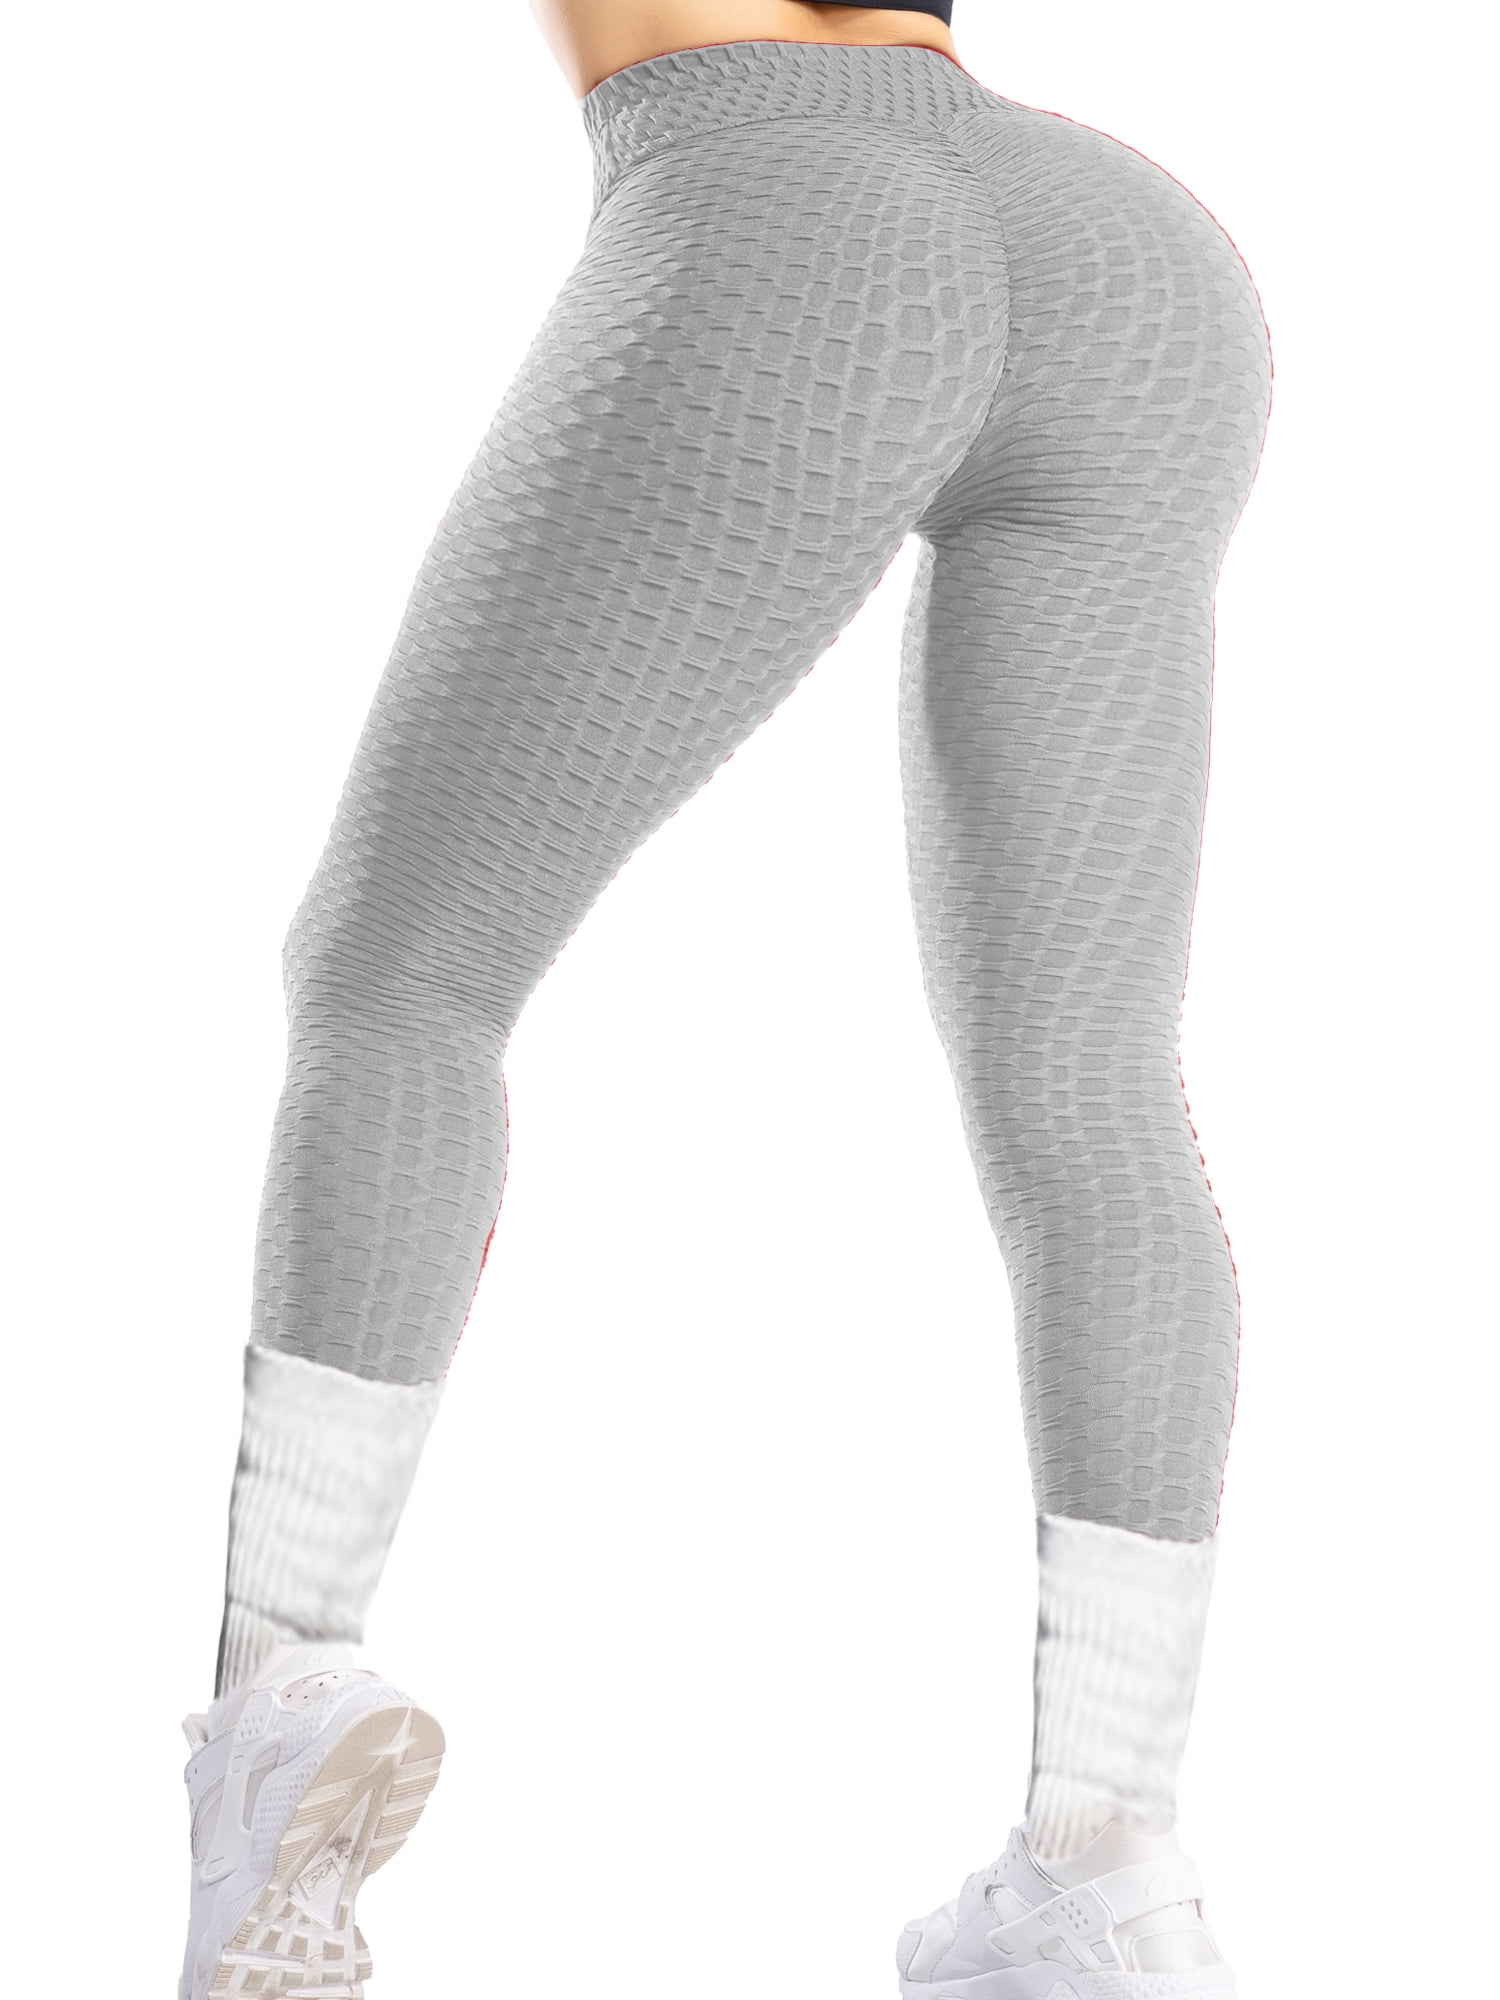 QRIC High Waisted Yoga Pants for Women Tummy Control Butt Lifting Workout  Leggings Tik Tok Textured Yoga Pants Gray M 